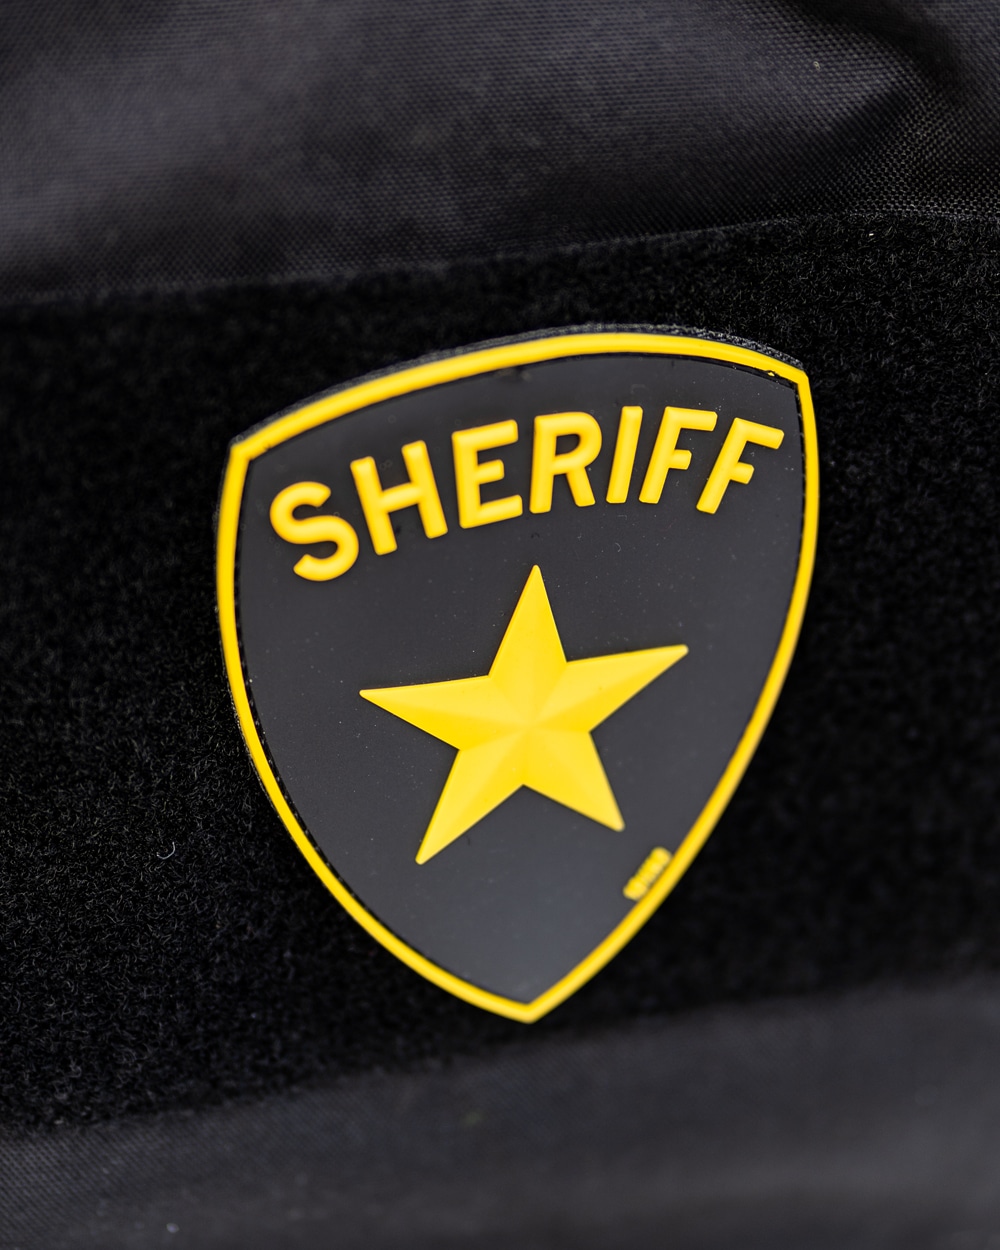 Sheriff Shield Sheriffi Velcromerkki